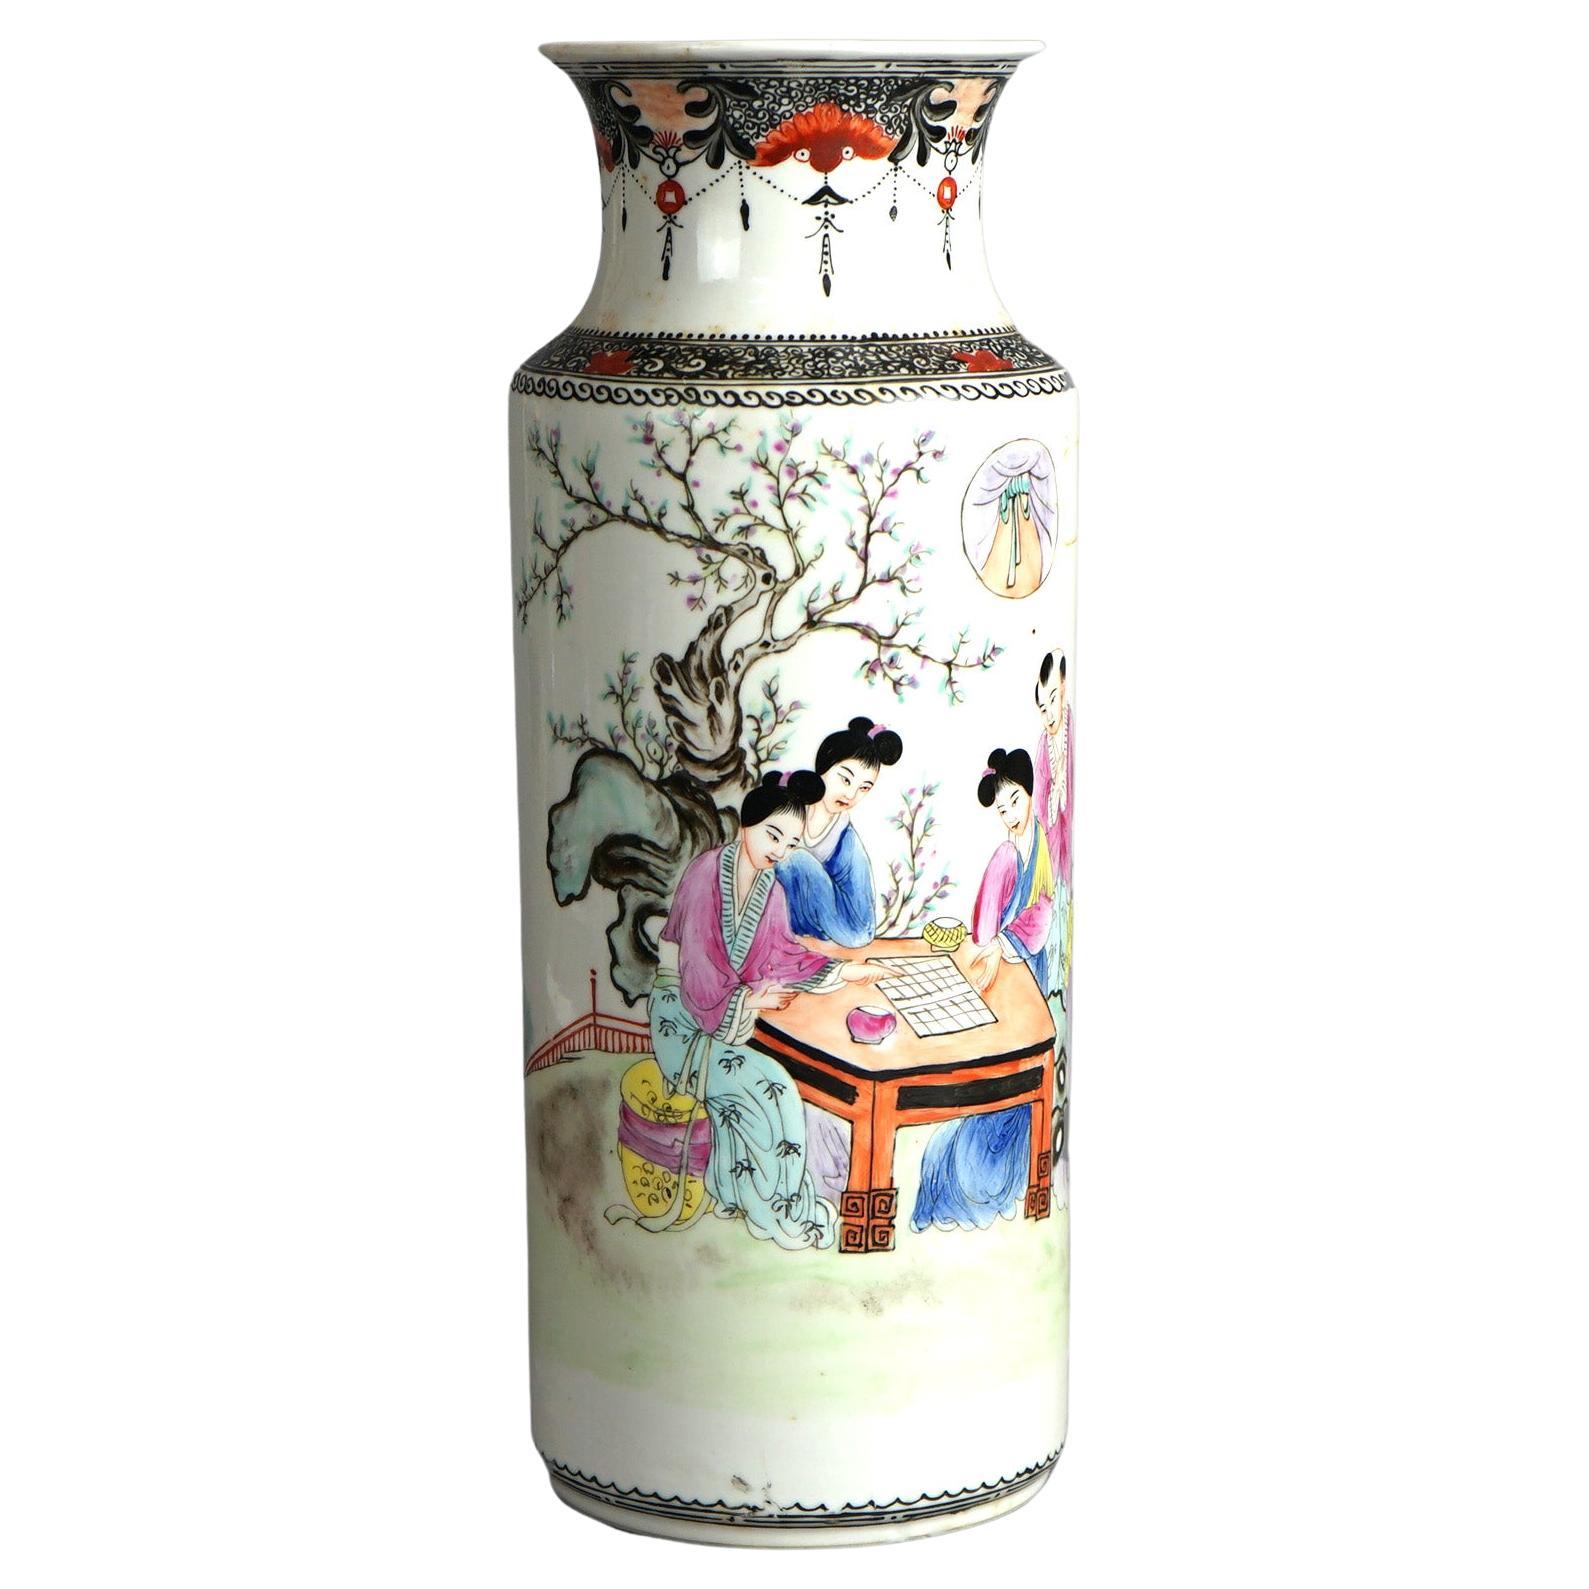 Tall Chinese Porcelain Vase with Garden Genre Scene 20thC